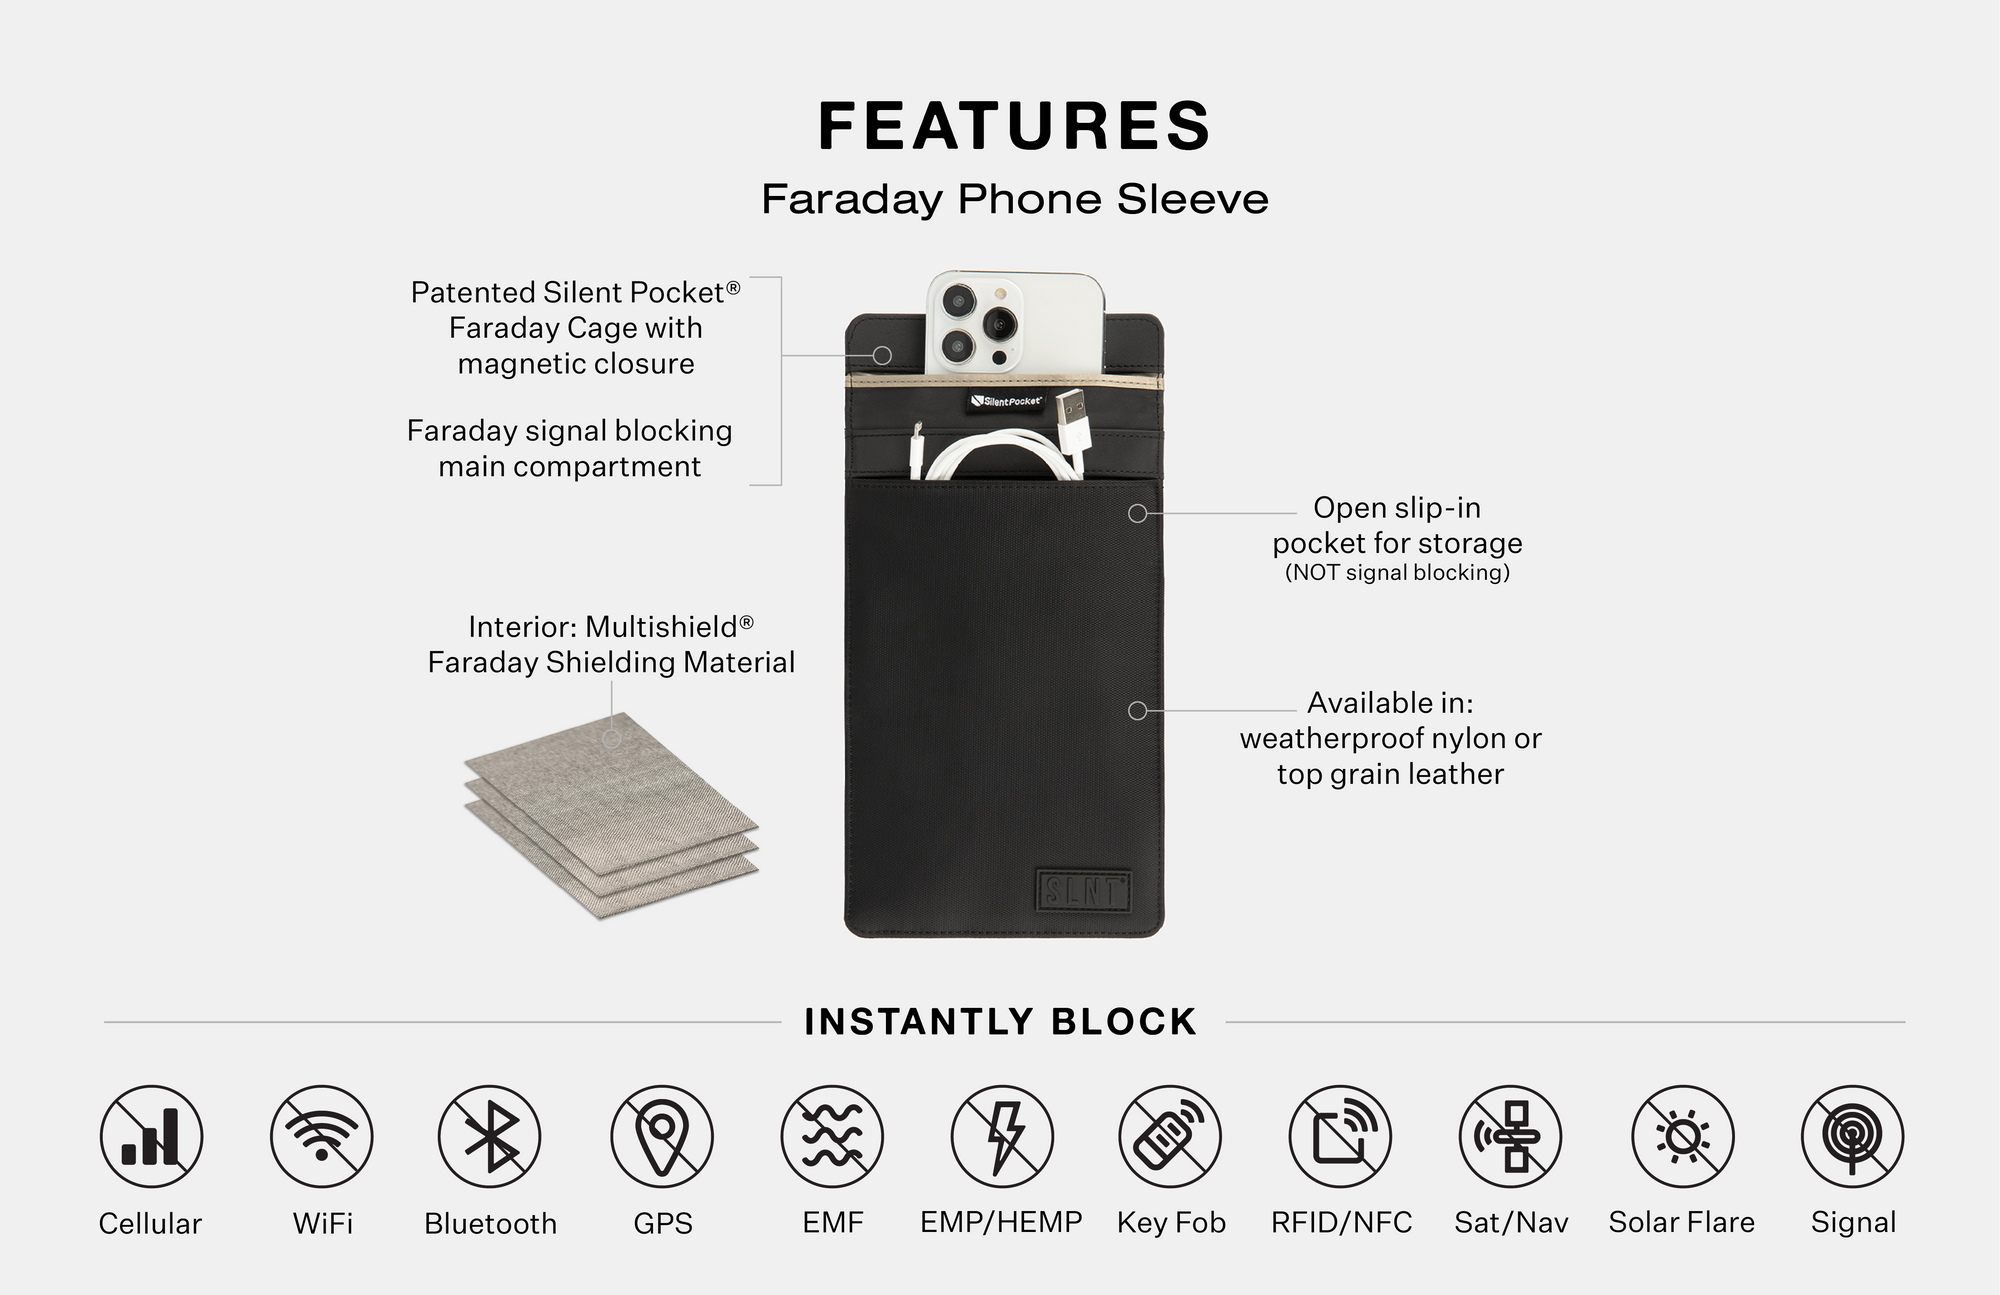 Faraday Phone Sleeve